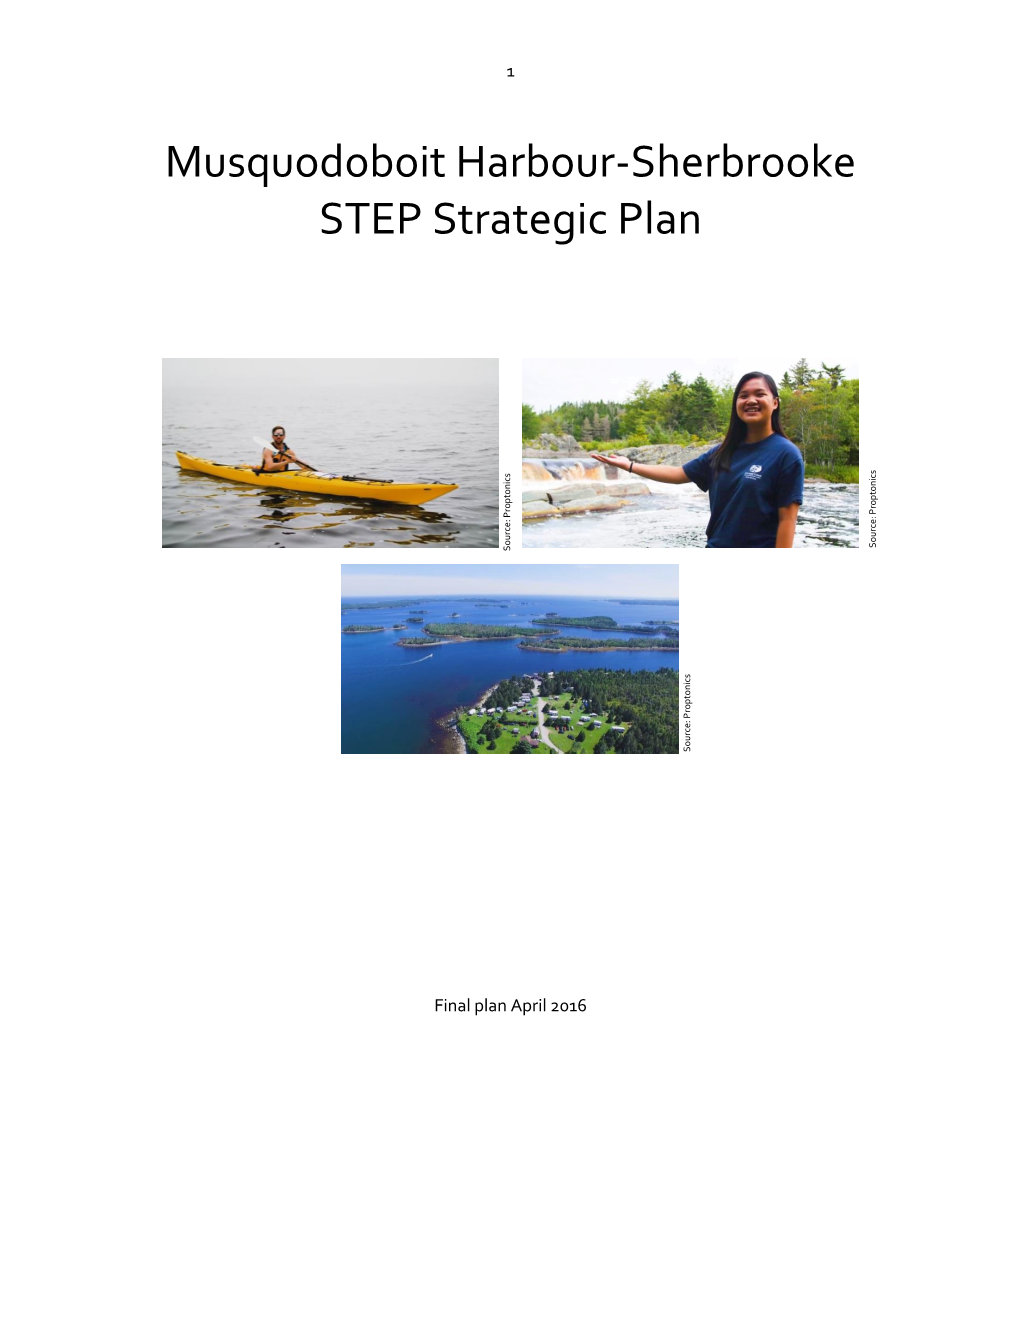 Musquodoboit Harbour-Sherbrooke STEP Strategic Plan